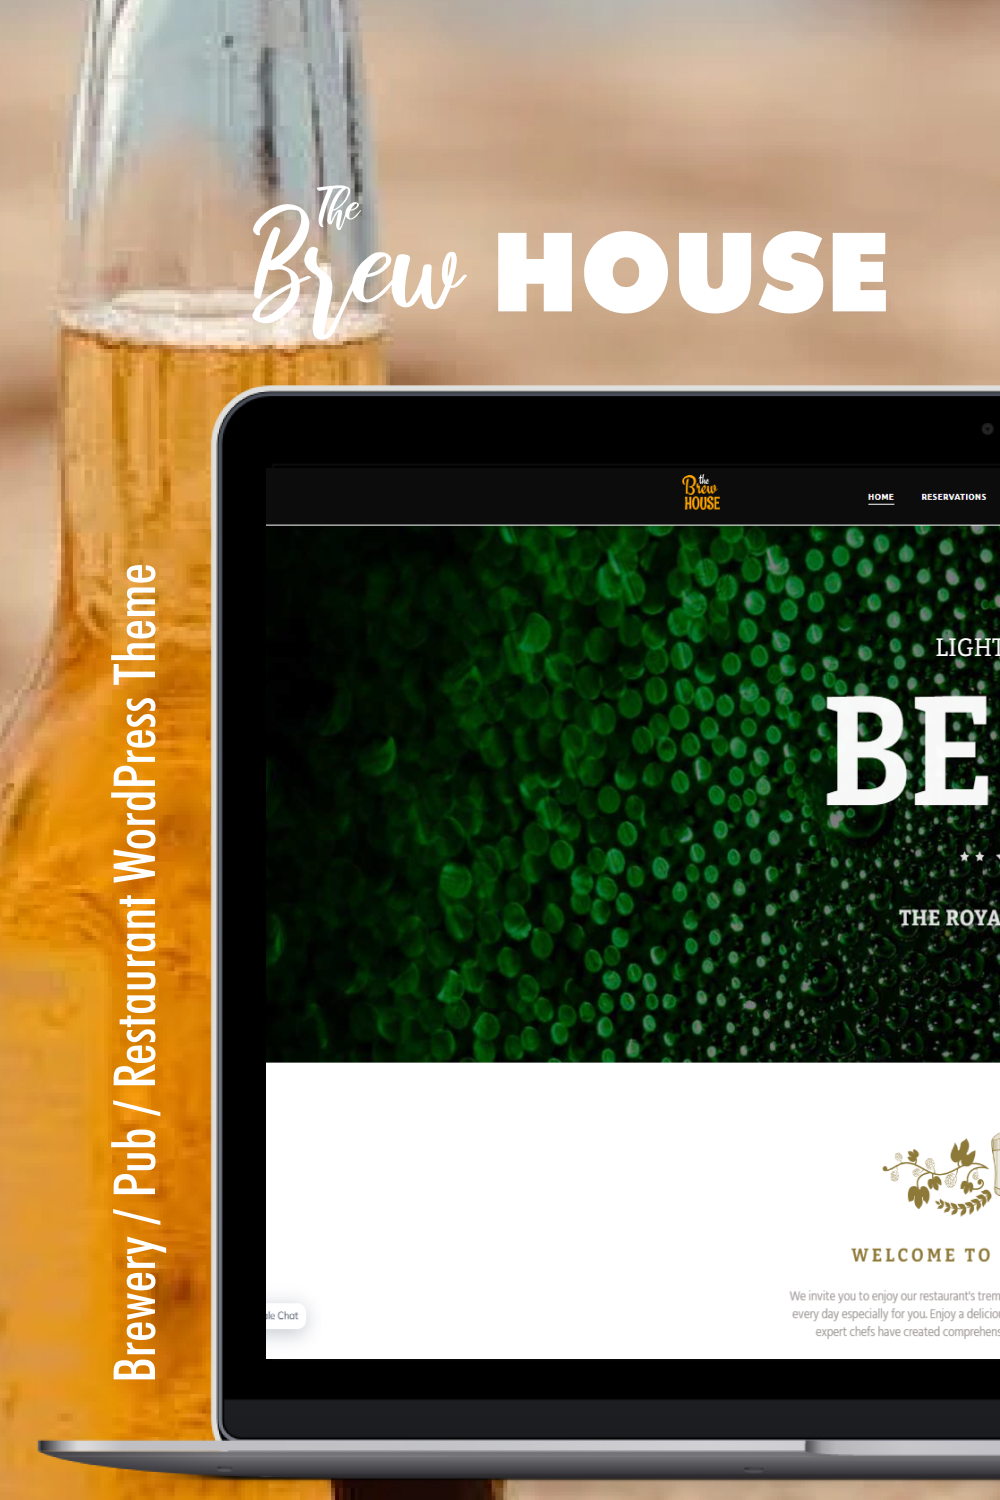 Pinterest illustrations brewhouse brewery pub restaurant wordpress theme.